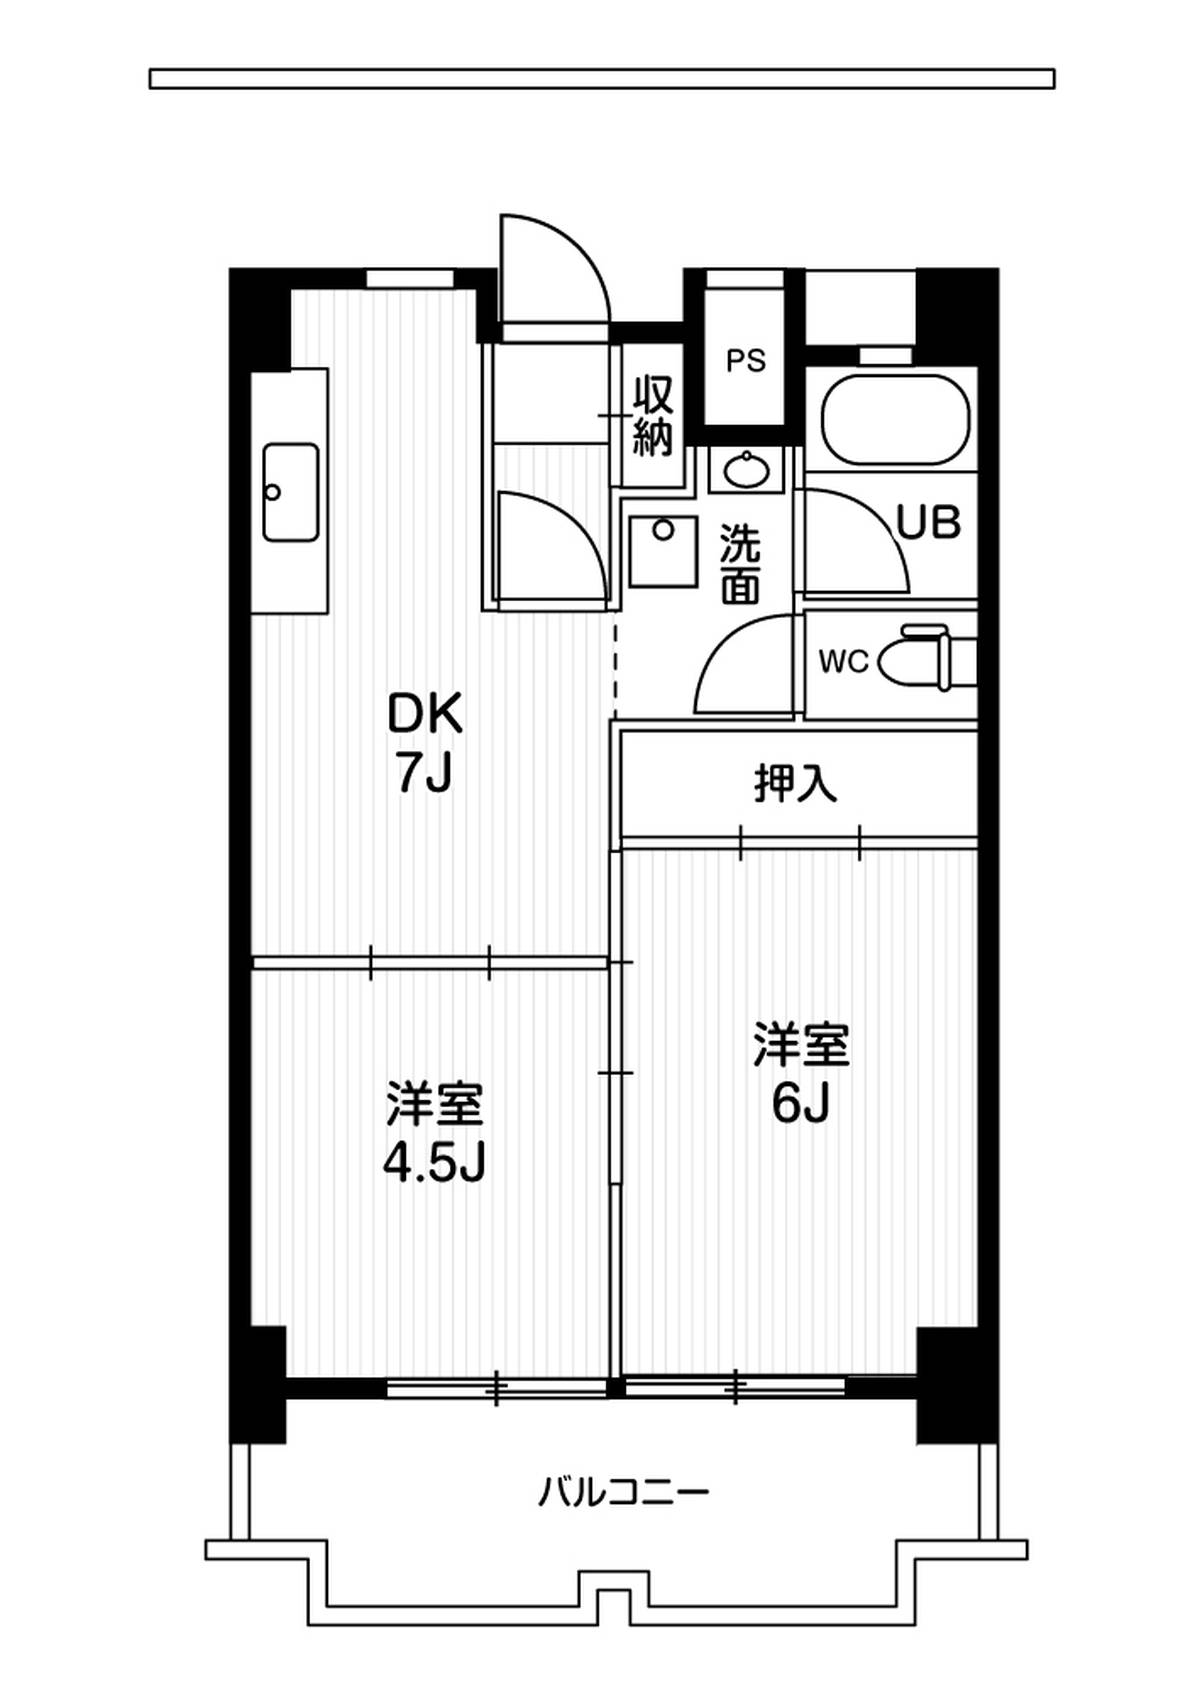 2DK floorplan of Village House Ichinomiya Tower in Ichinomiya-shi